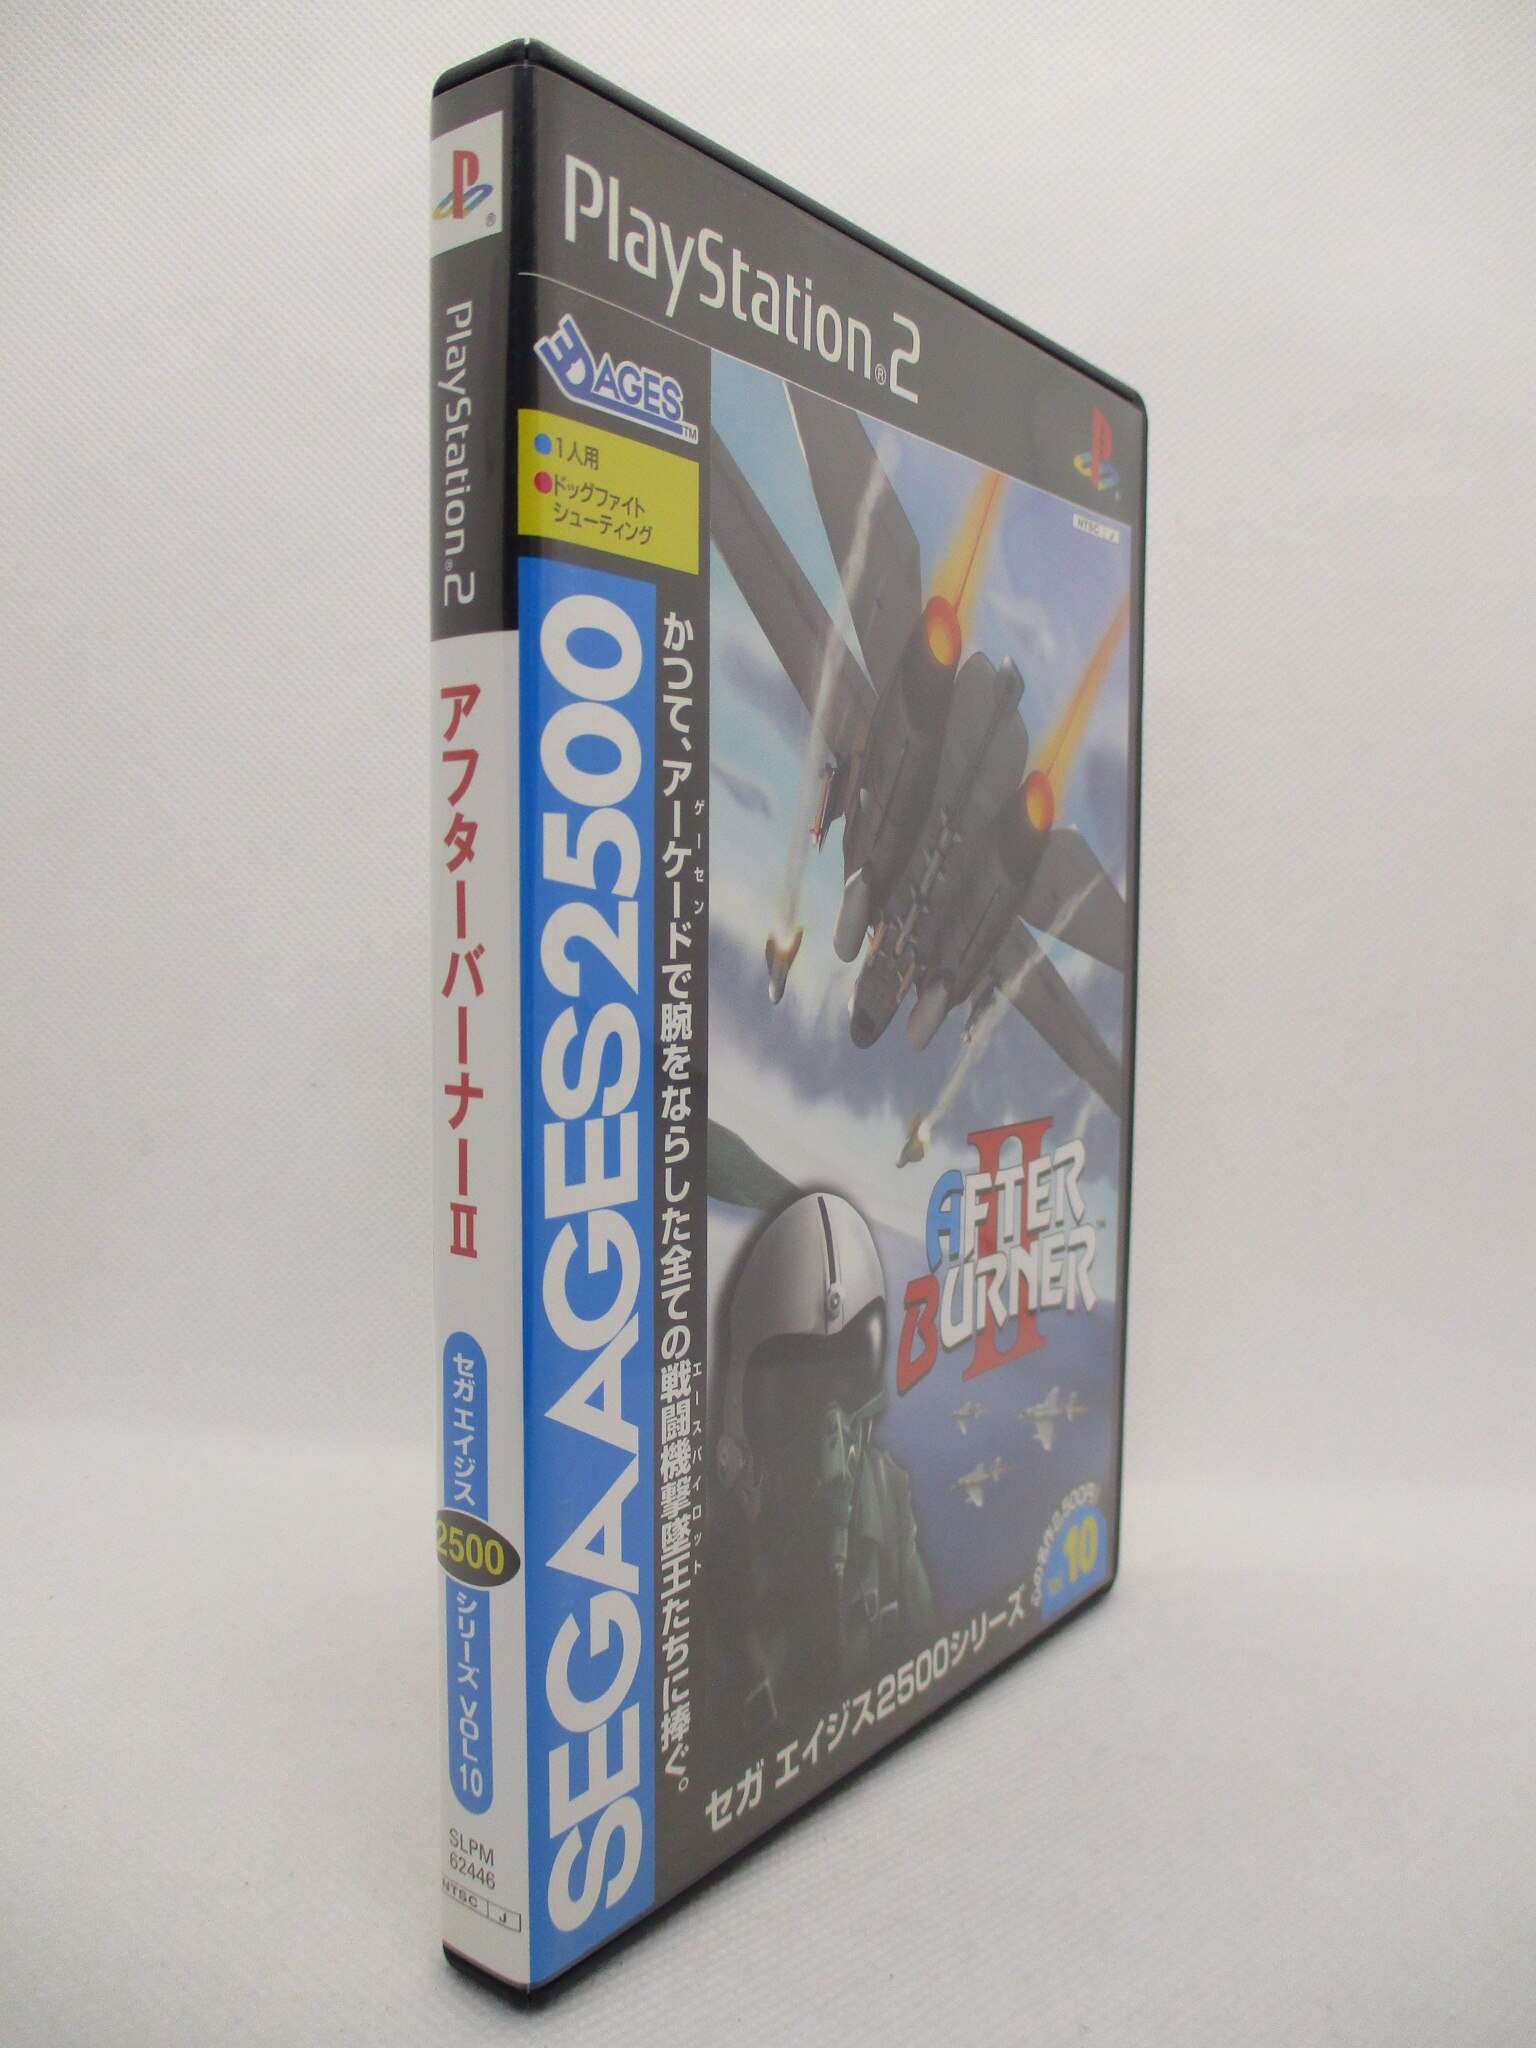 【PS2】アフターバーナー2 セガエイジス2500シリーズVol.10